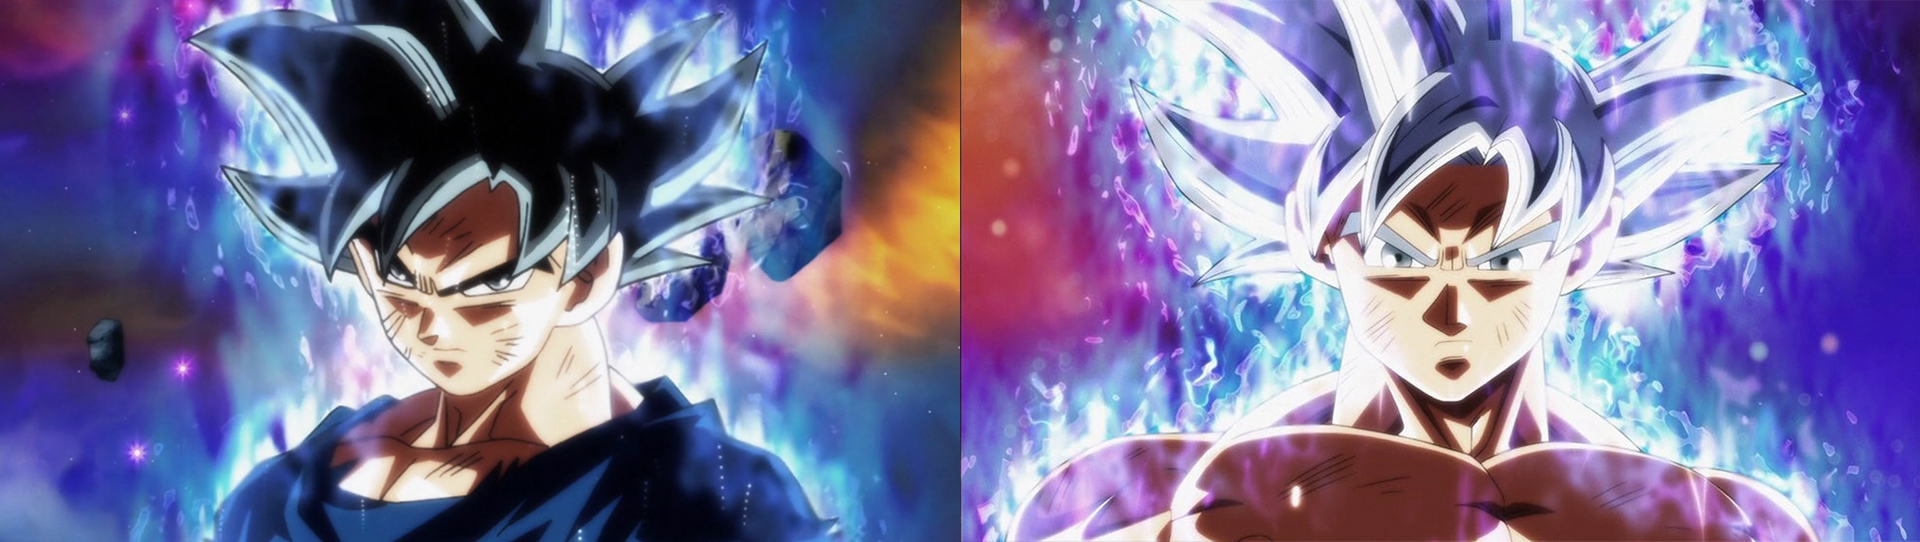 Versions of Ultra Instinct Goku